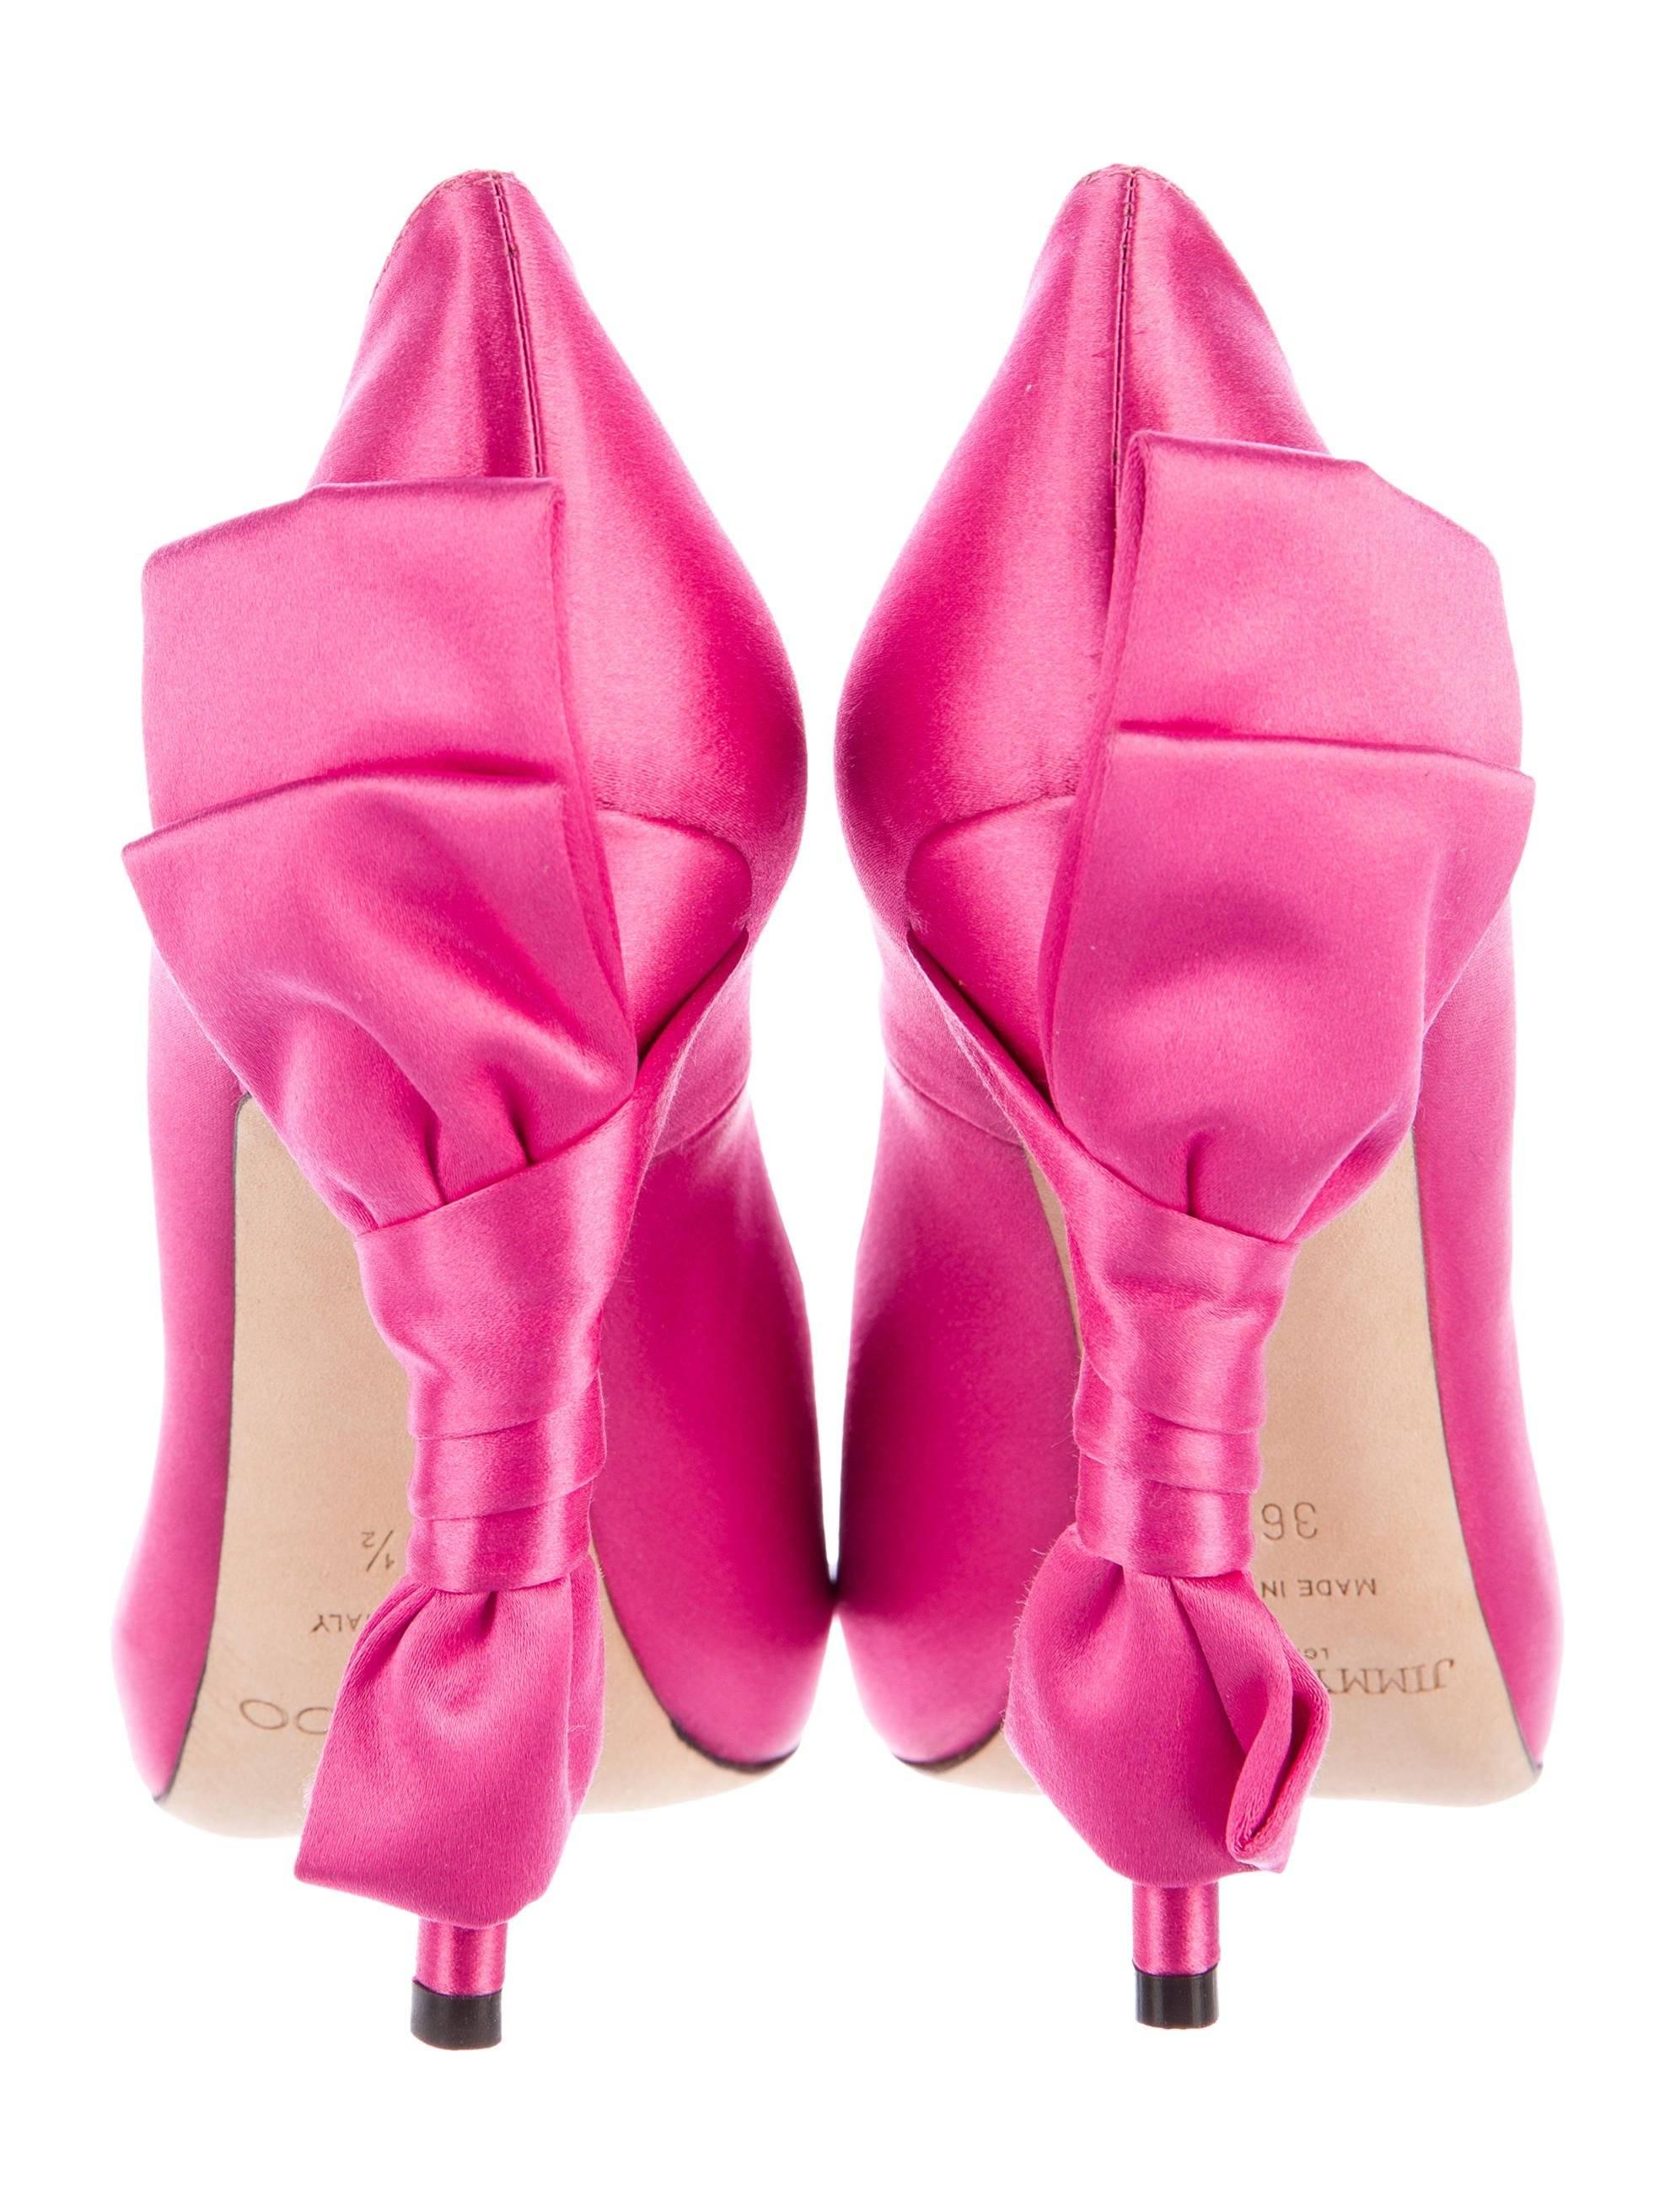 jimmy choo pink satin heels